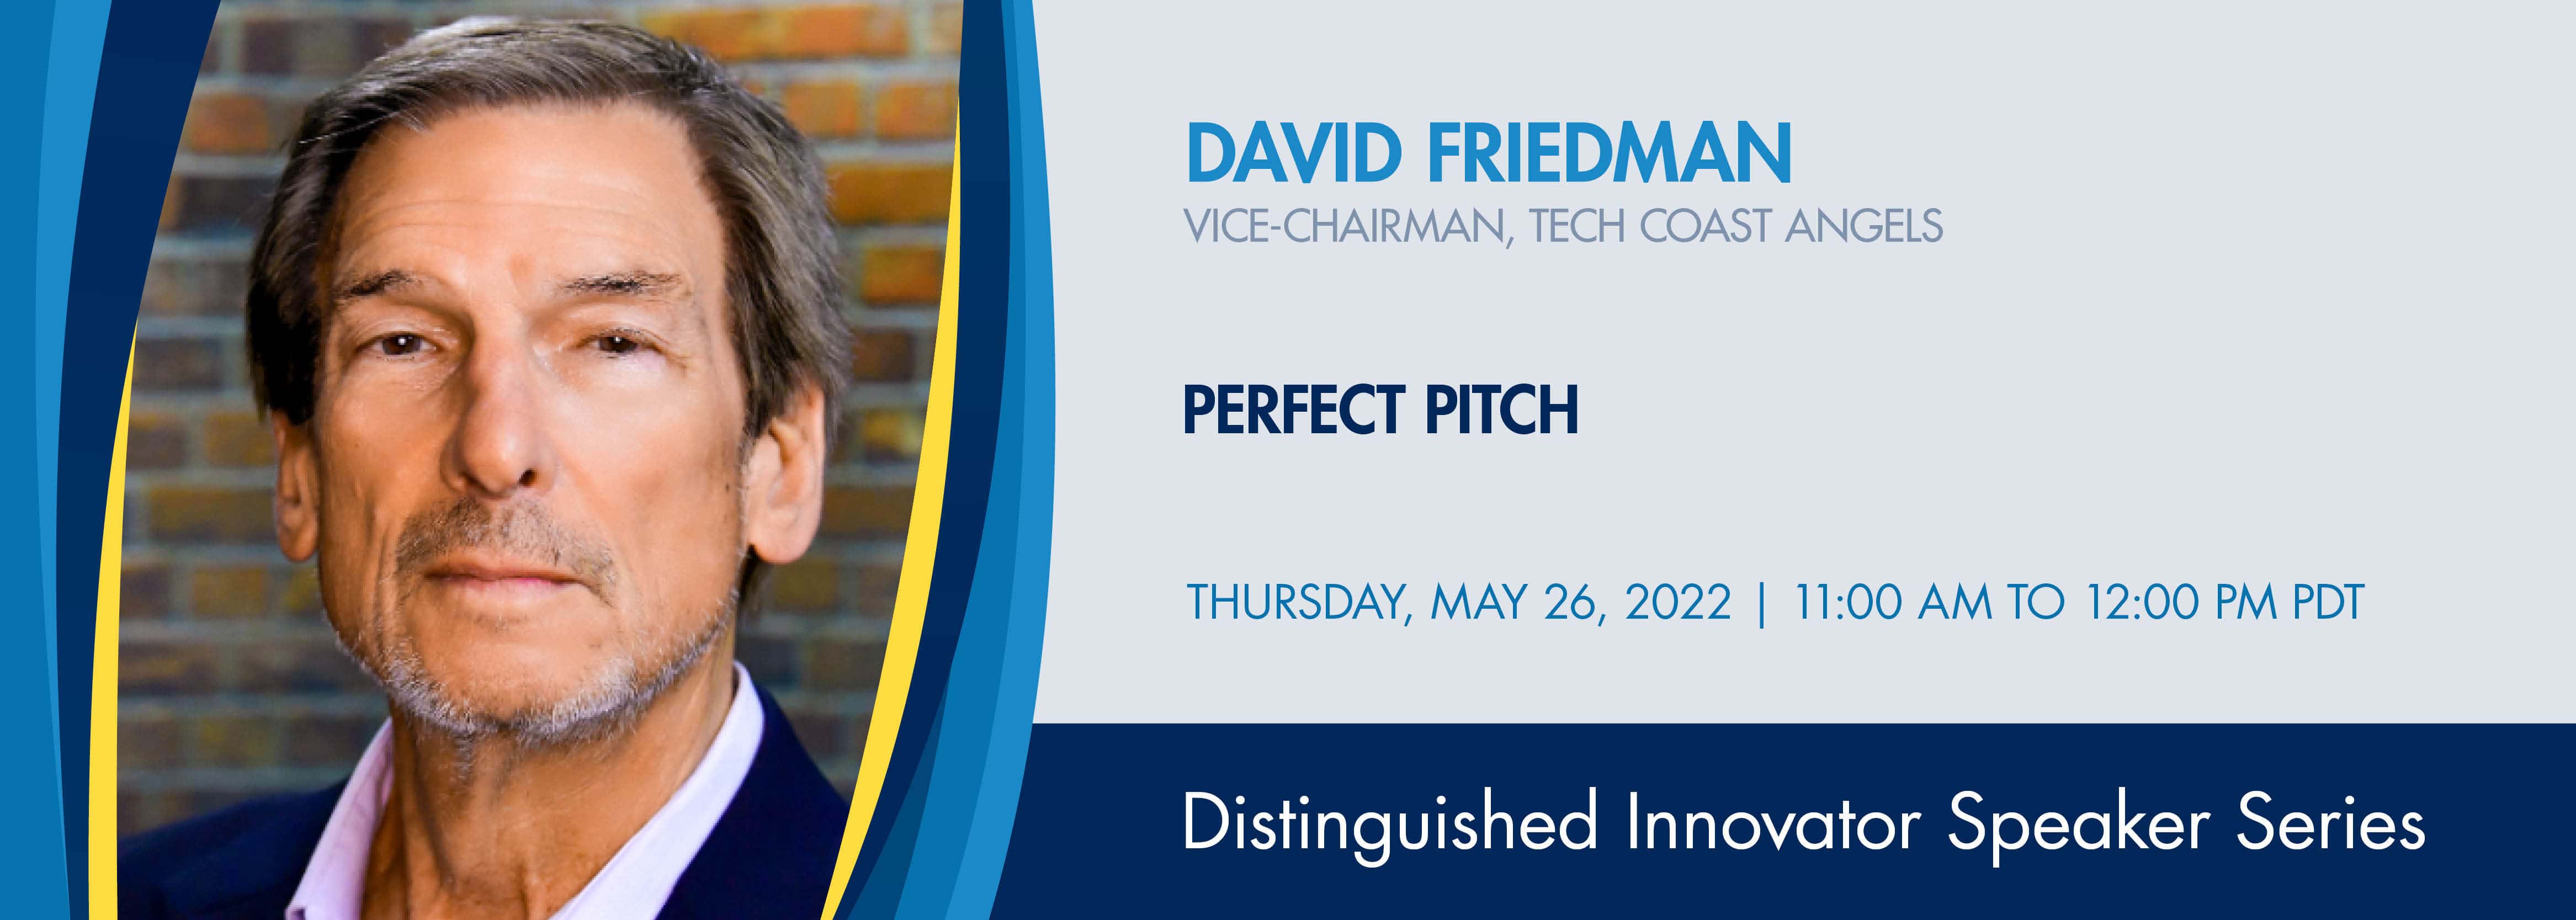 distinguished innovative speaker series david friedman